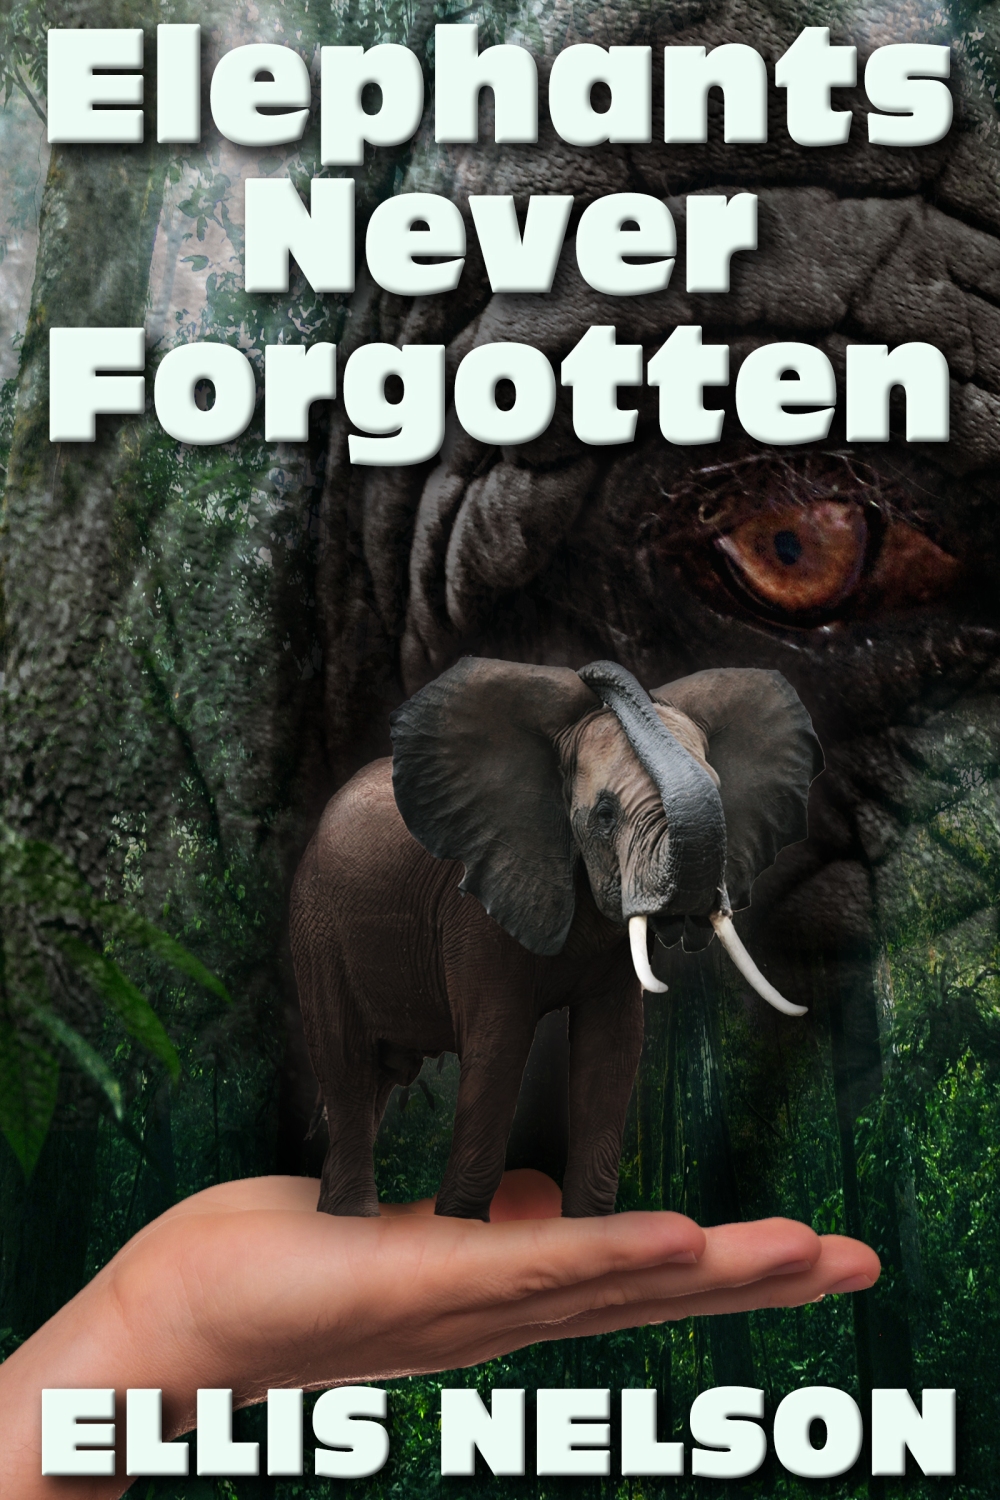 elephants-never-forgotten-without-logo